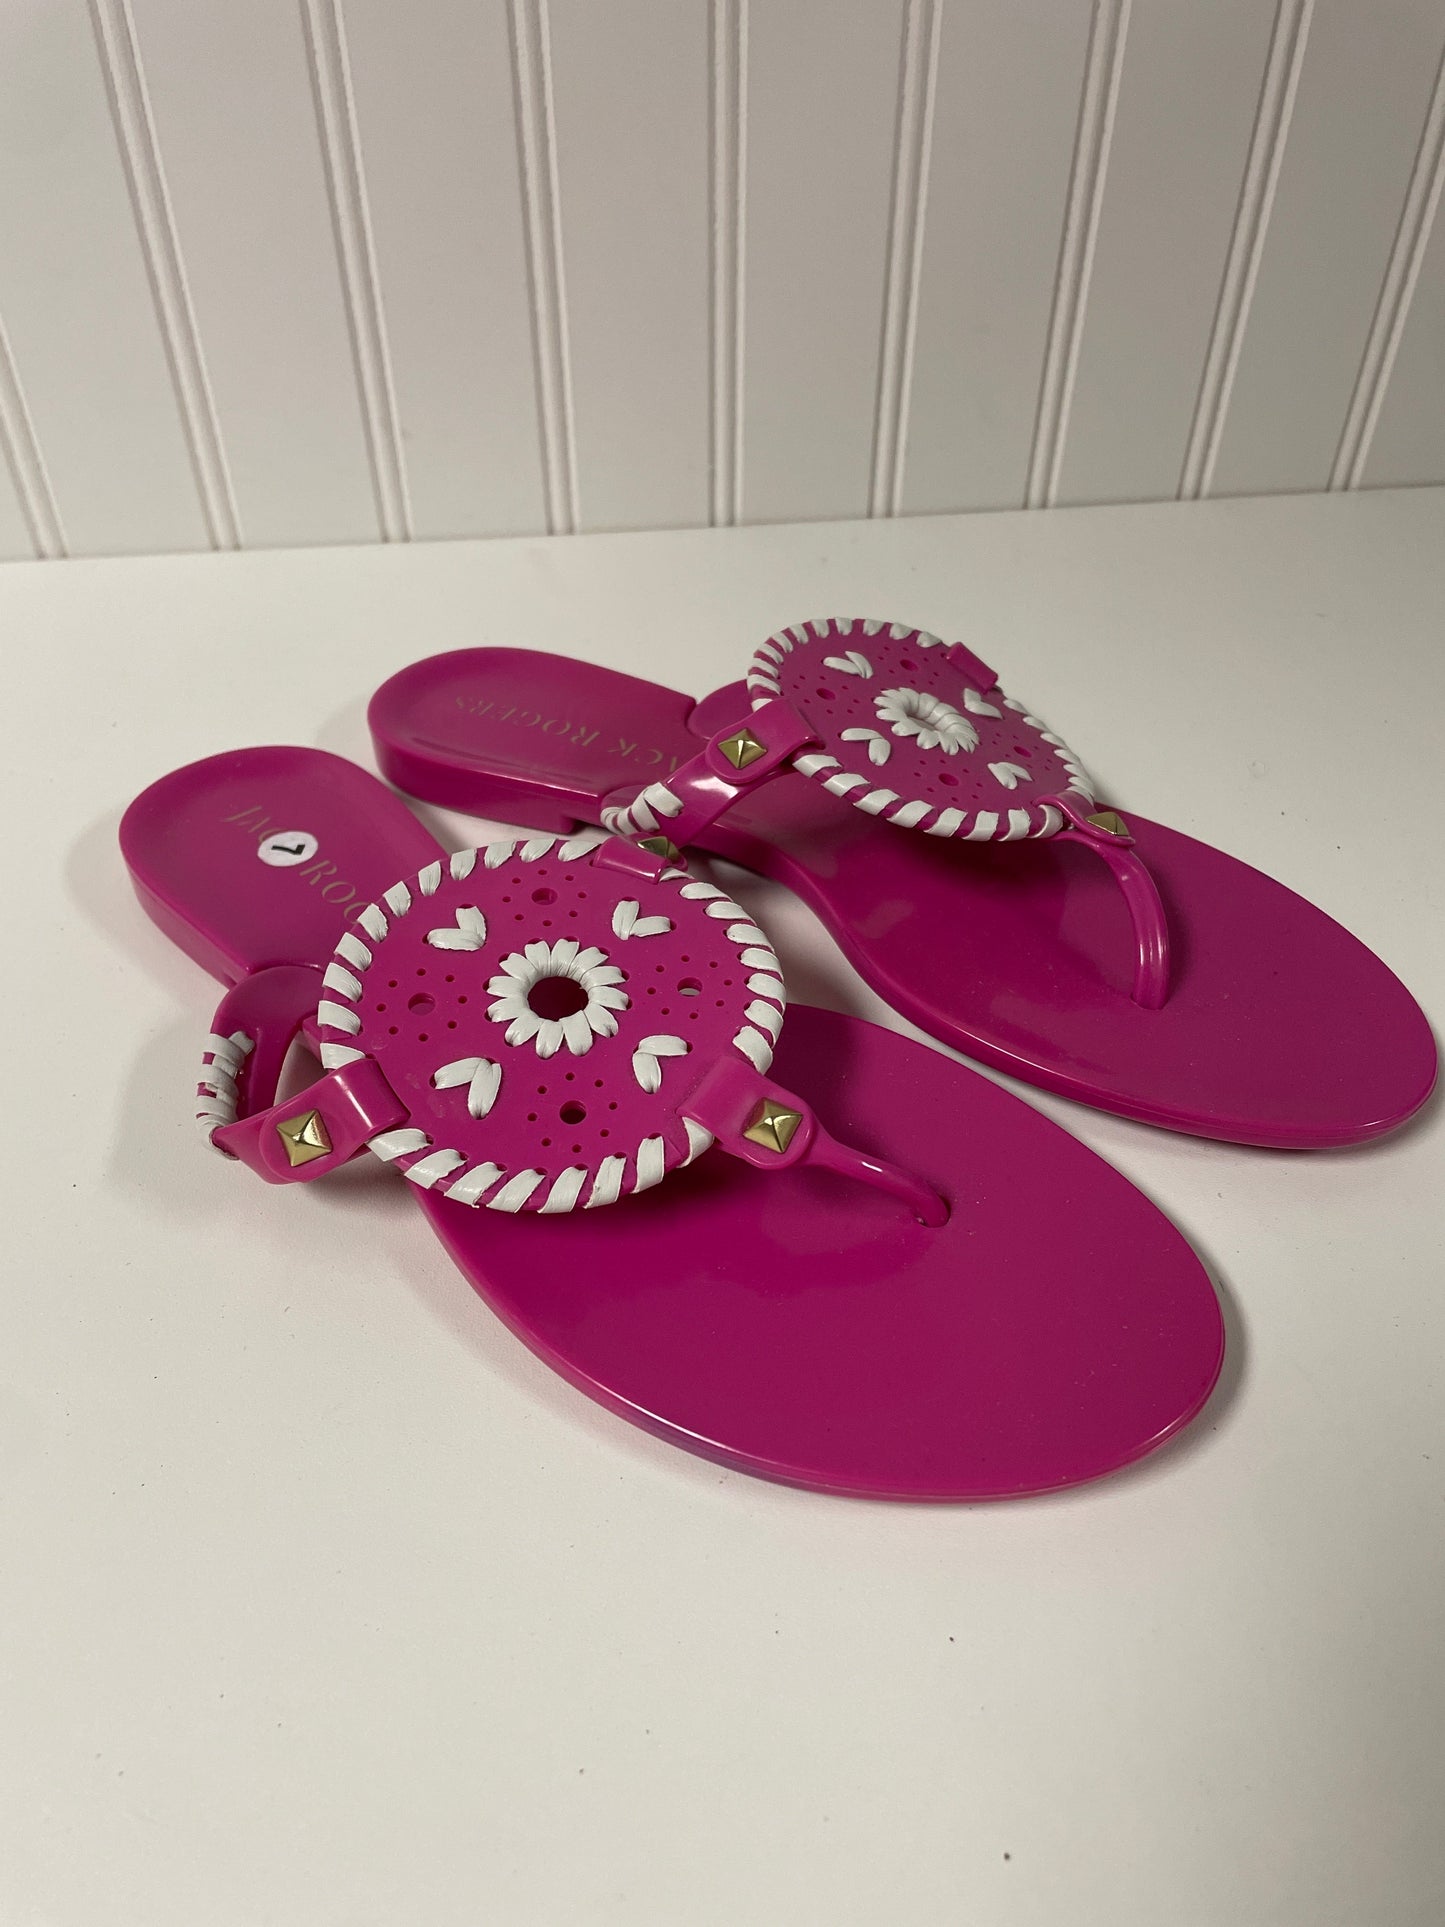 Sandals Flip Flops By Jack Rogers  Size: 7